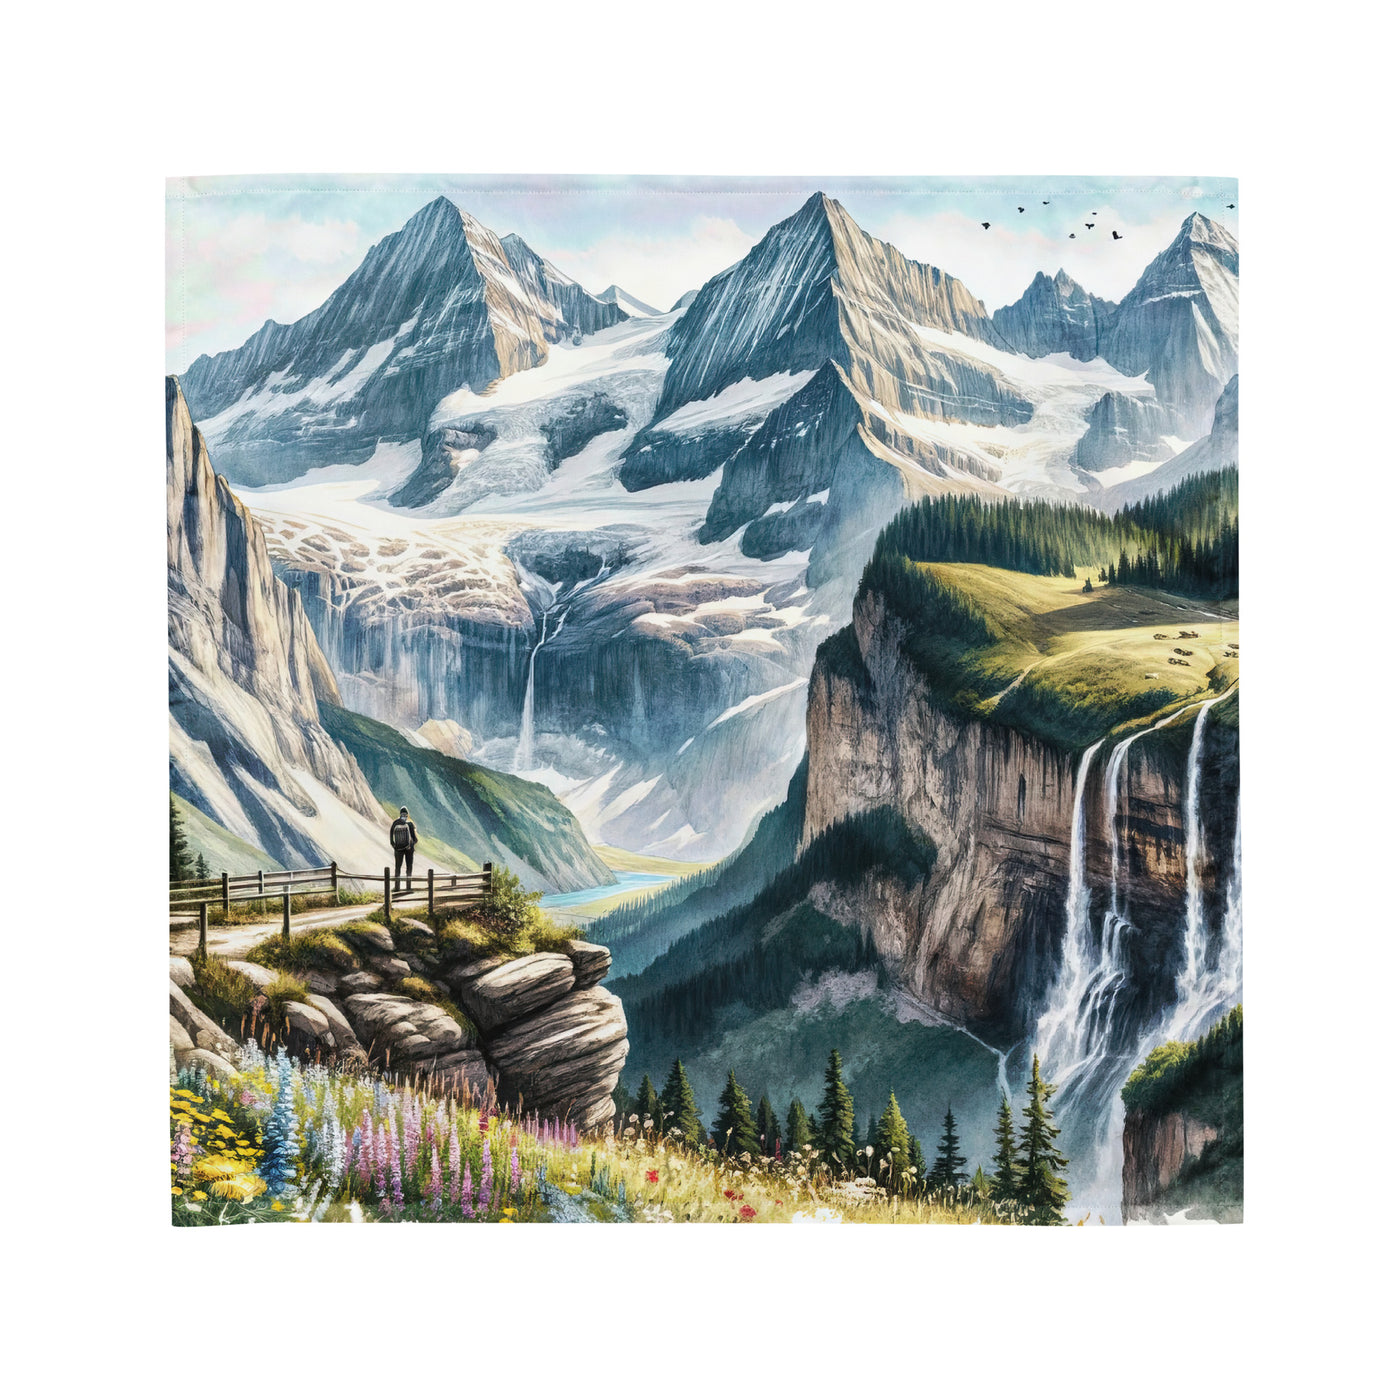 Aquarell-Panoramablick der Alpen mit schneebedeckten Gipfeln, Wasserfällen und Wanderern - Bandana (All-Over Print) wandern xxx yyy zzz M